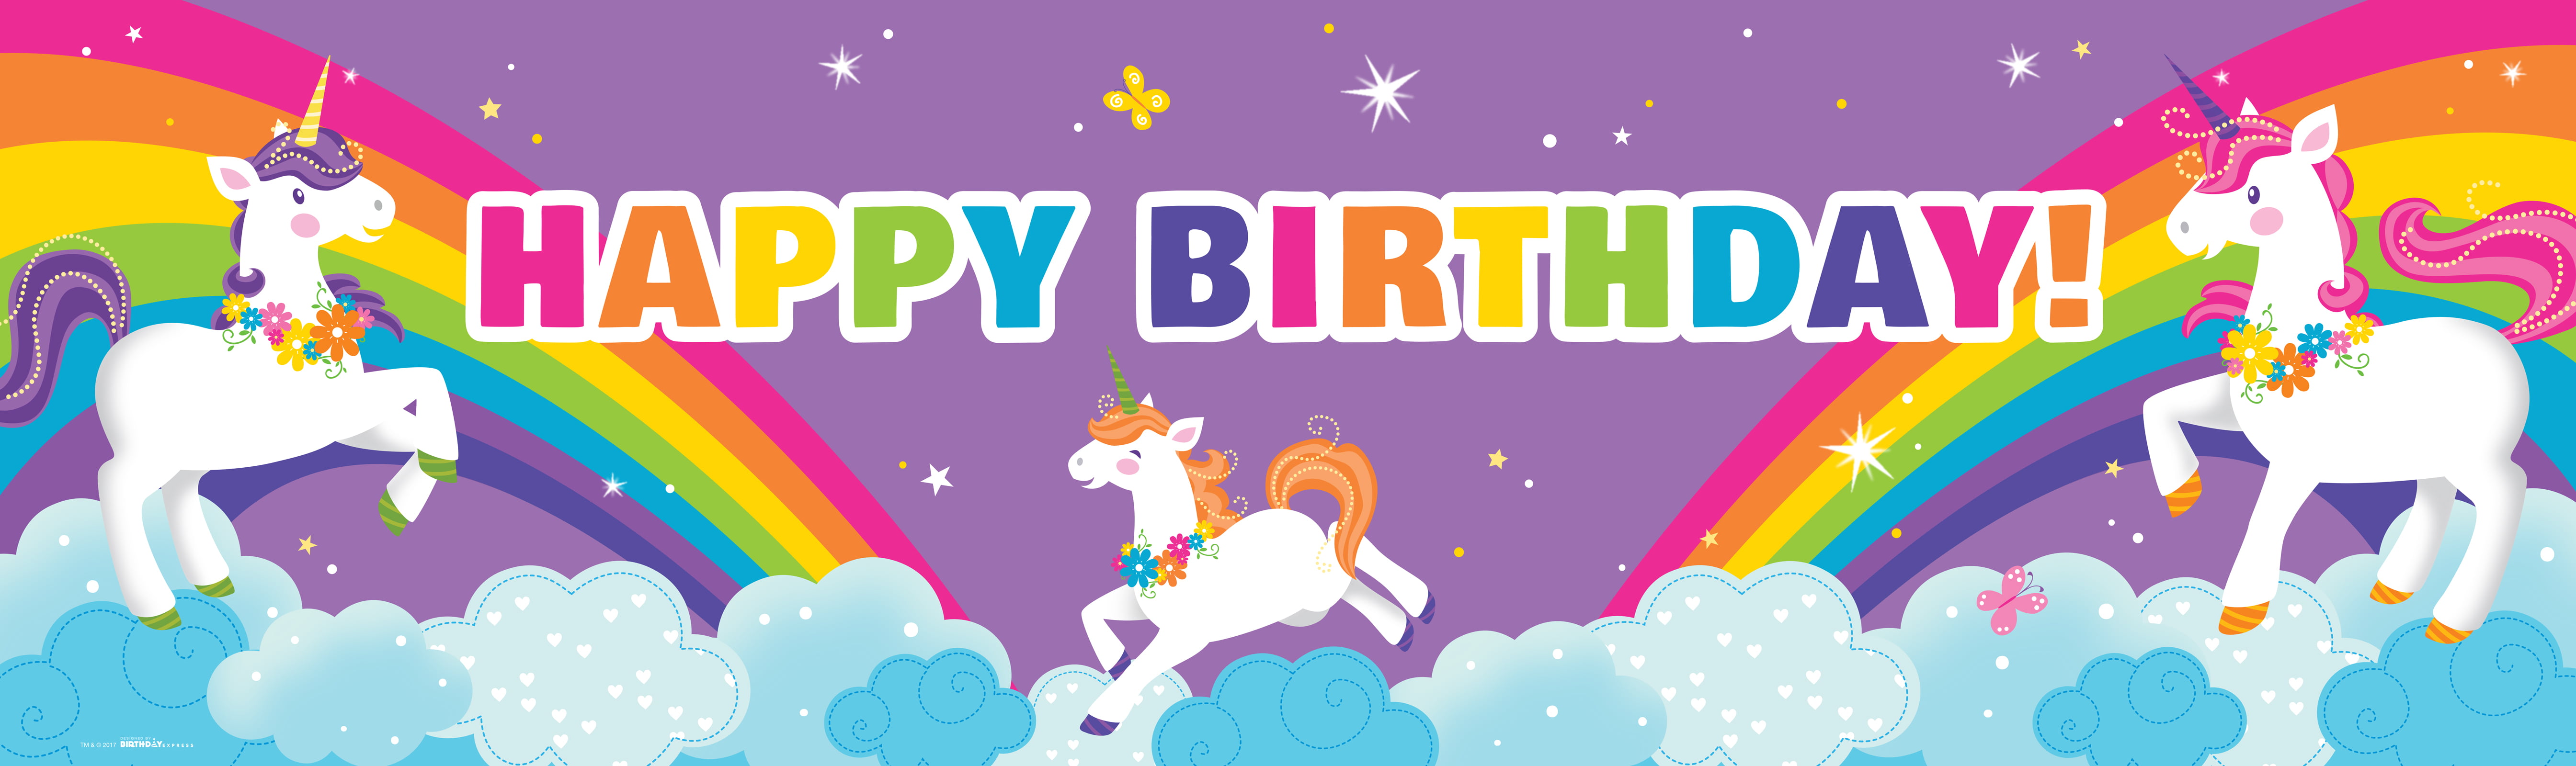 Fairytale Unicorn  Party  Birthday  Banner Walmart com 